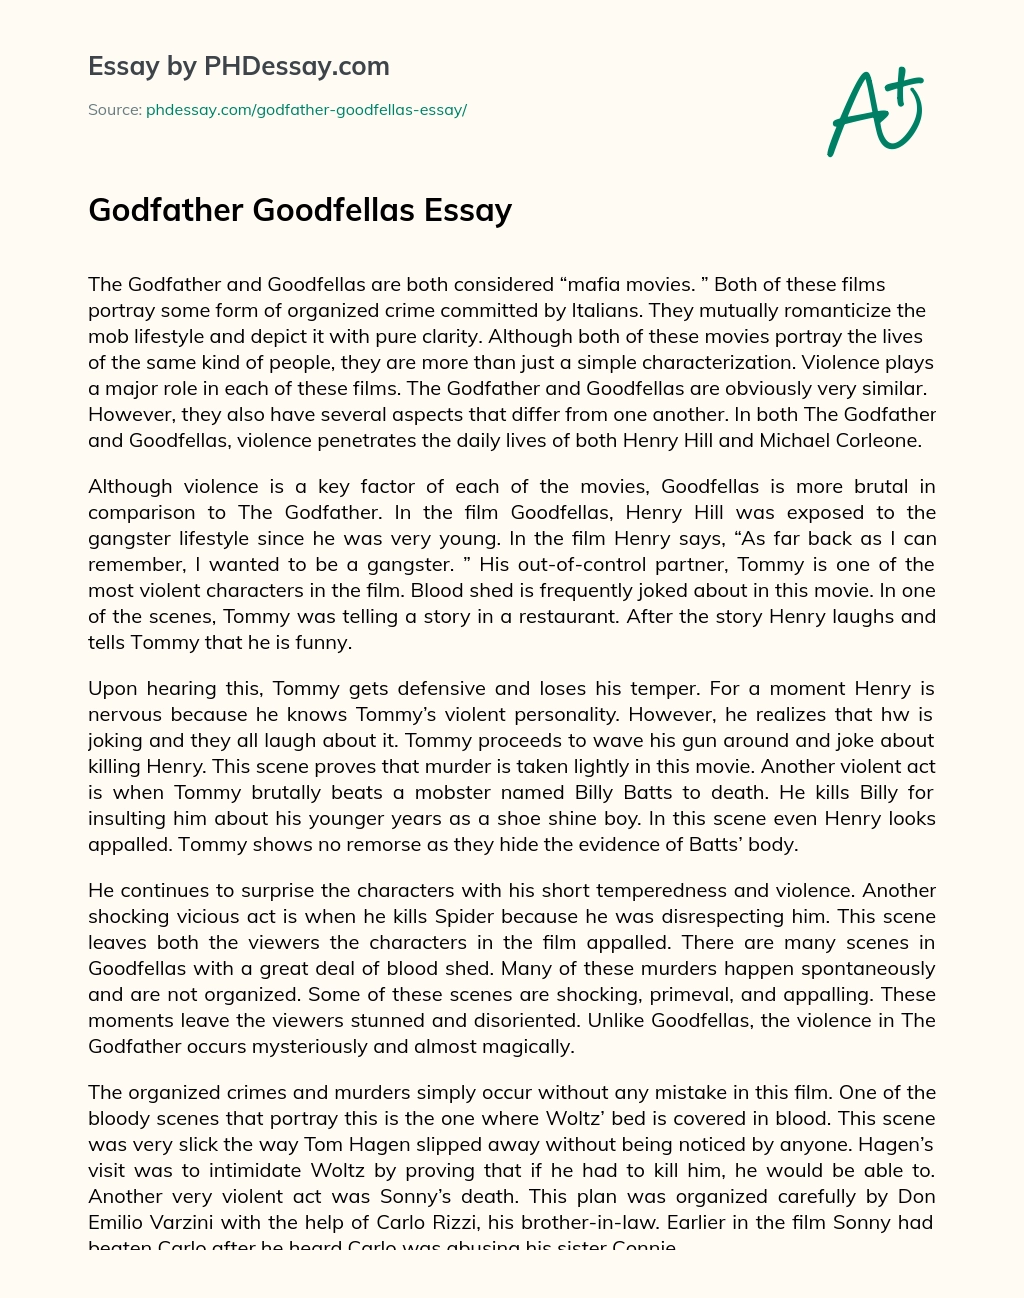 Godfather Goodfellas Essay essay